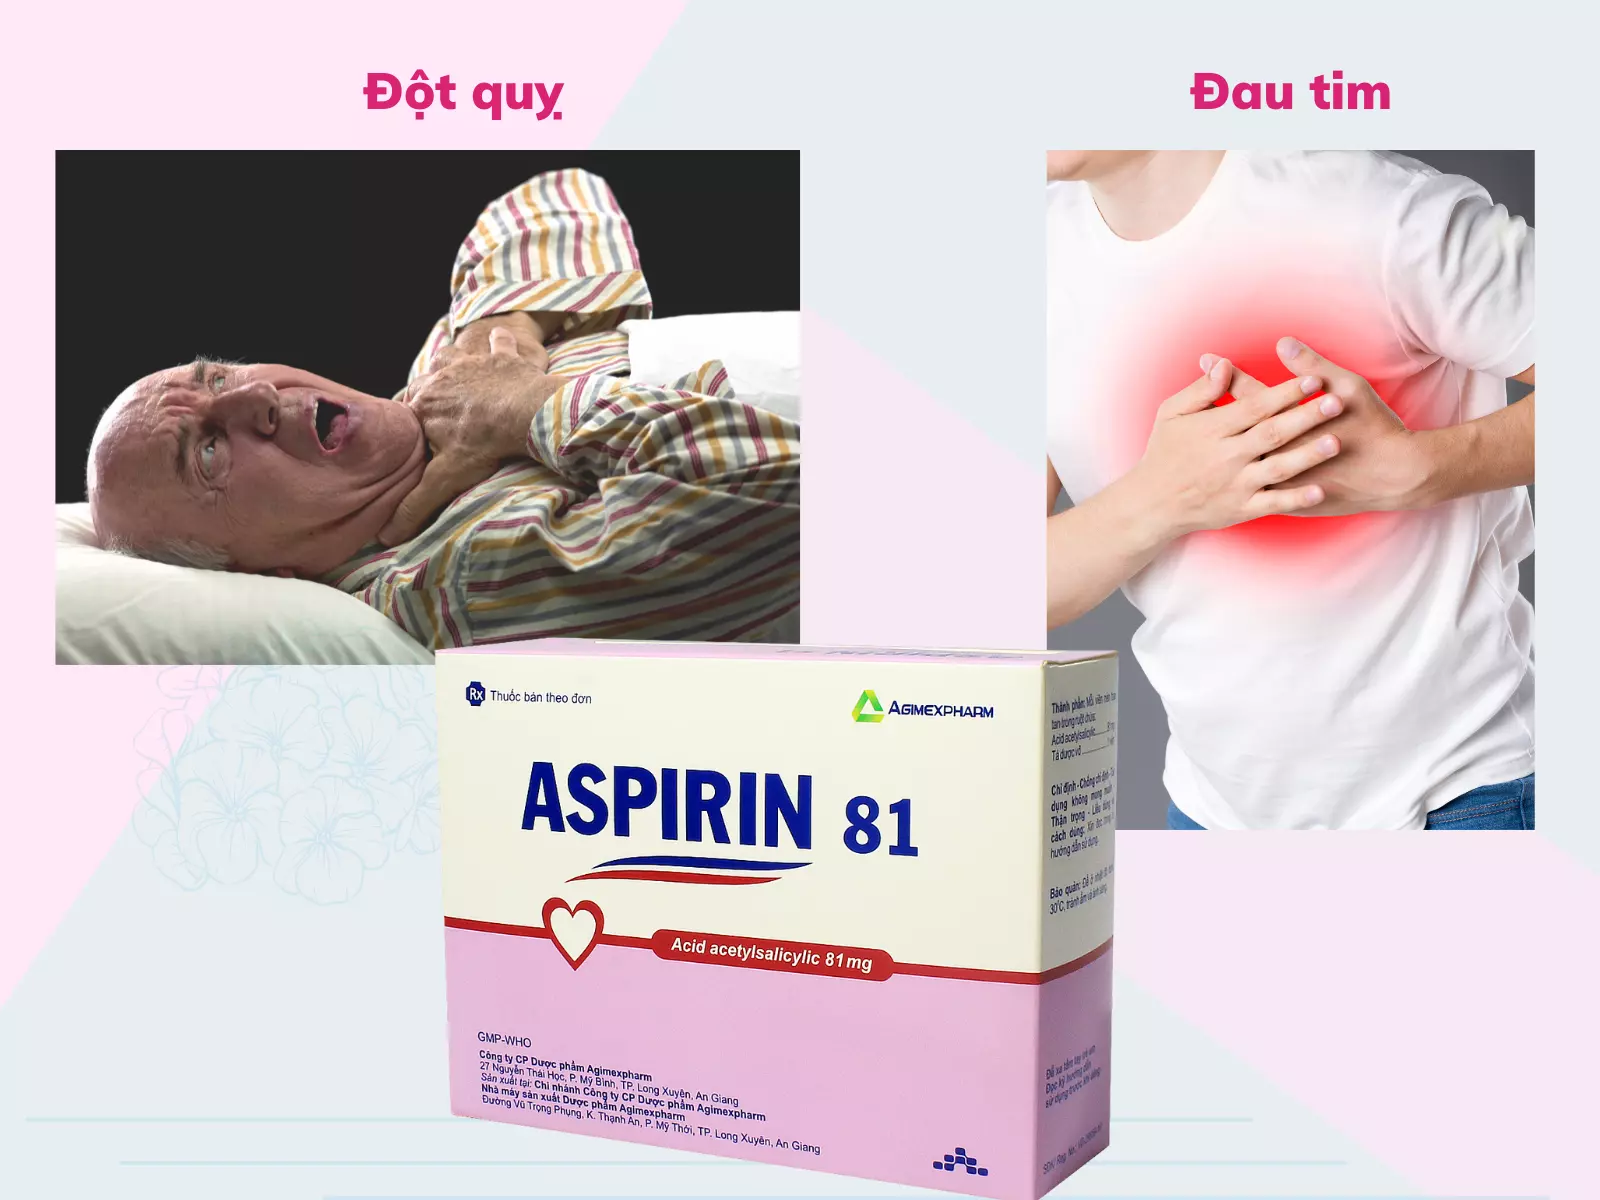 aspirin-81mg-la-thuoc-dieu-tri-tim-mach-duoc-su-dung-pho-bien-nhat